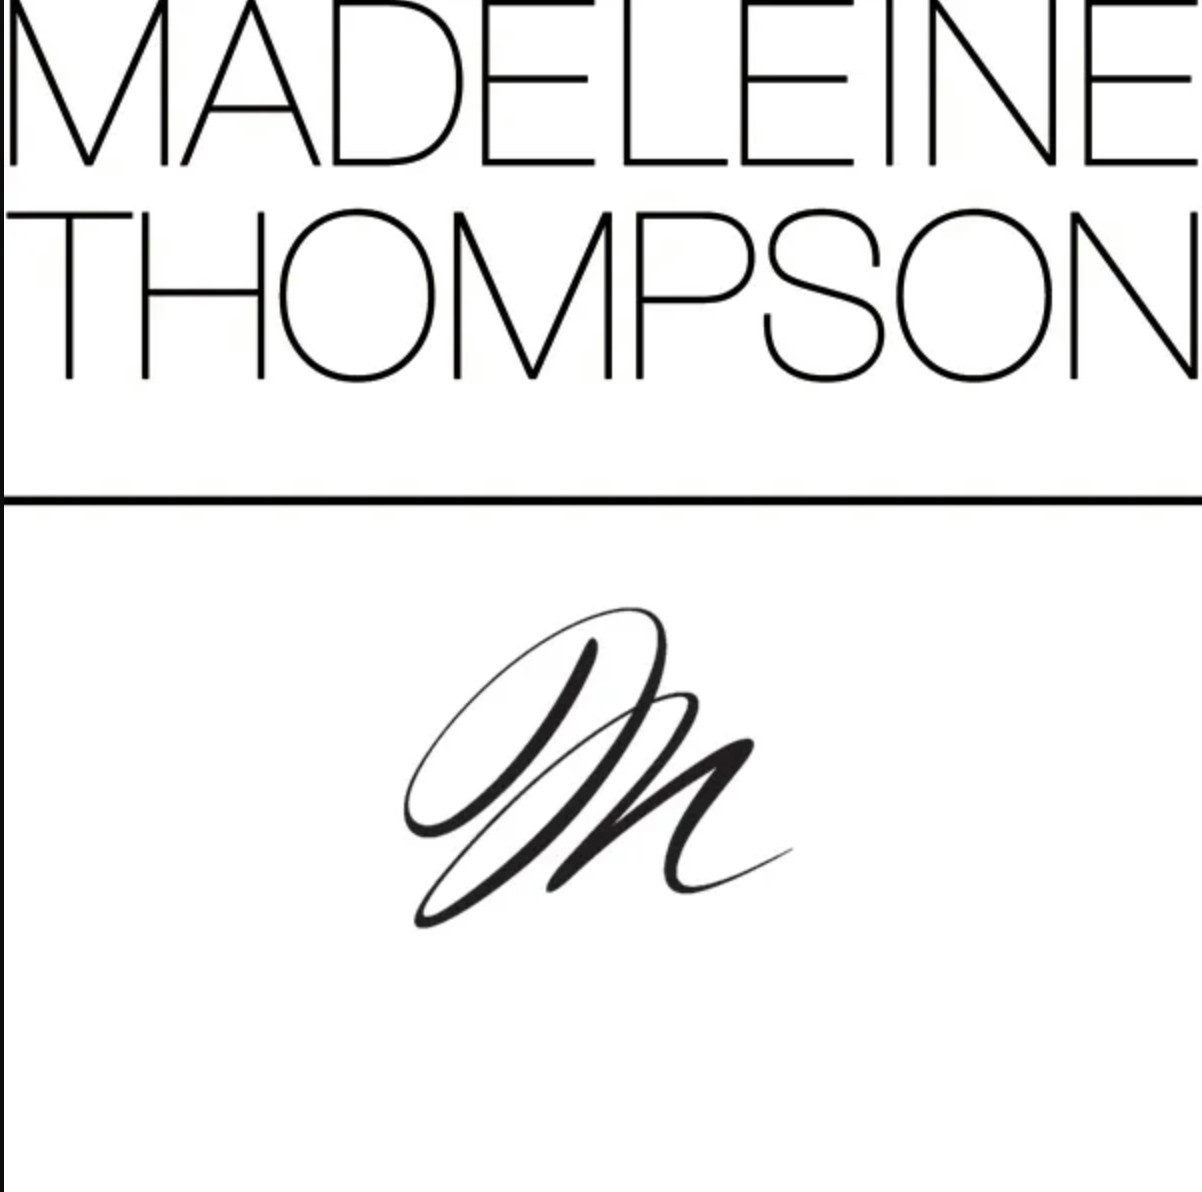 MADELEINE THOMPSON